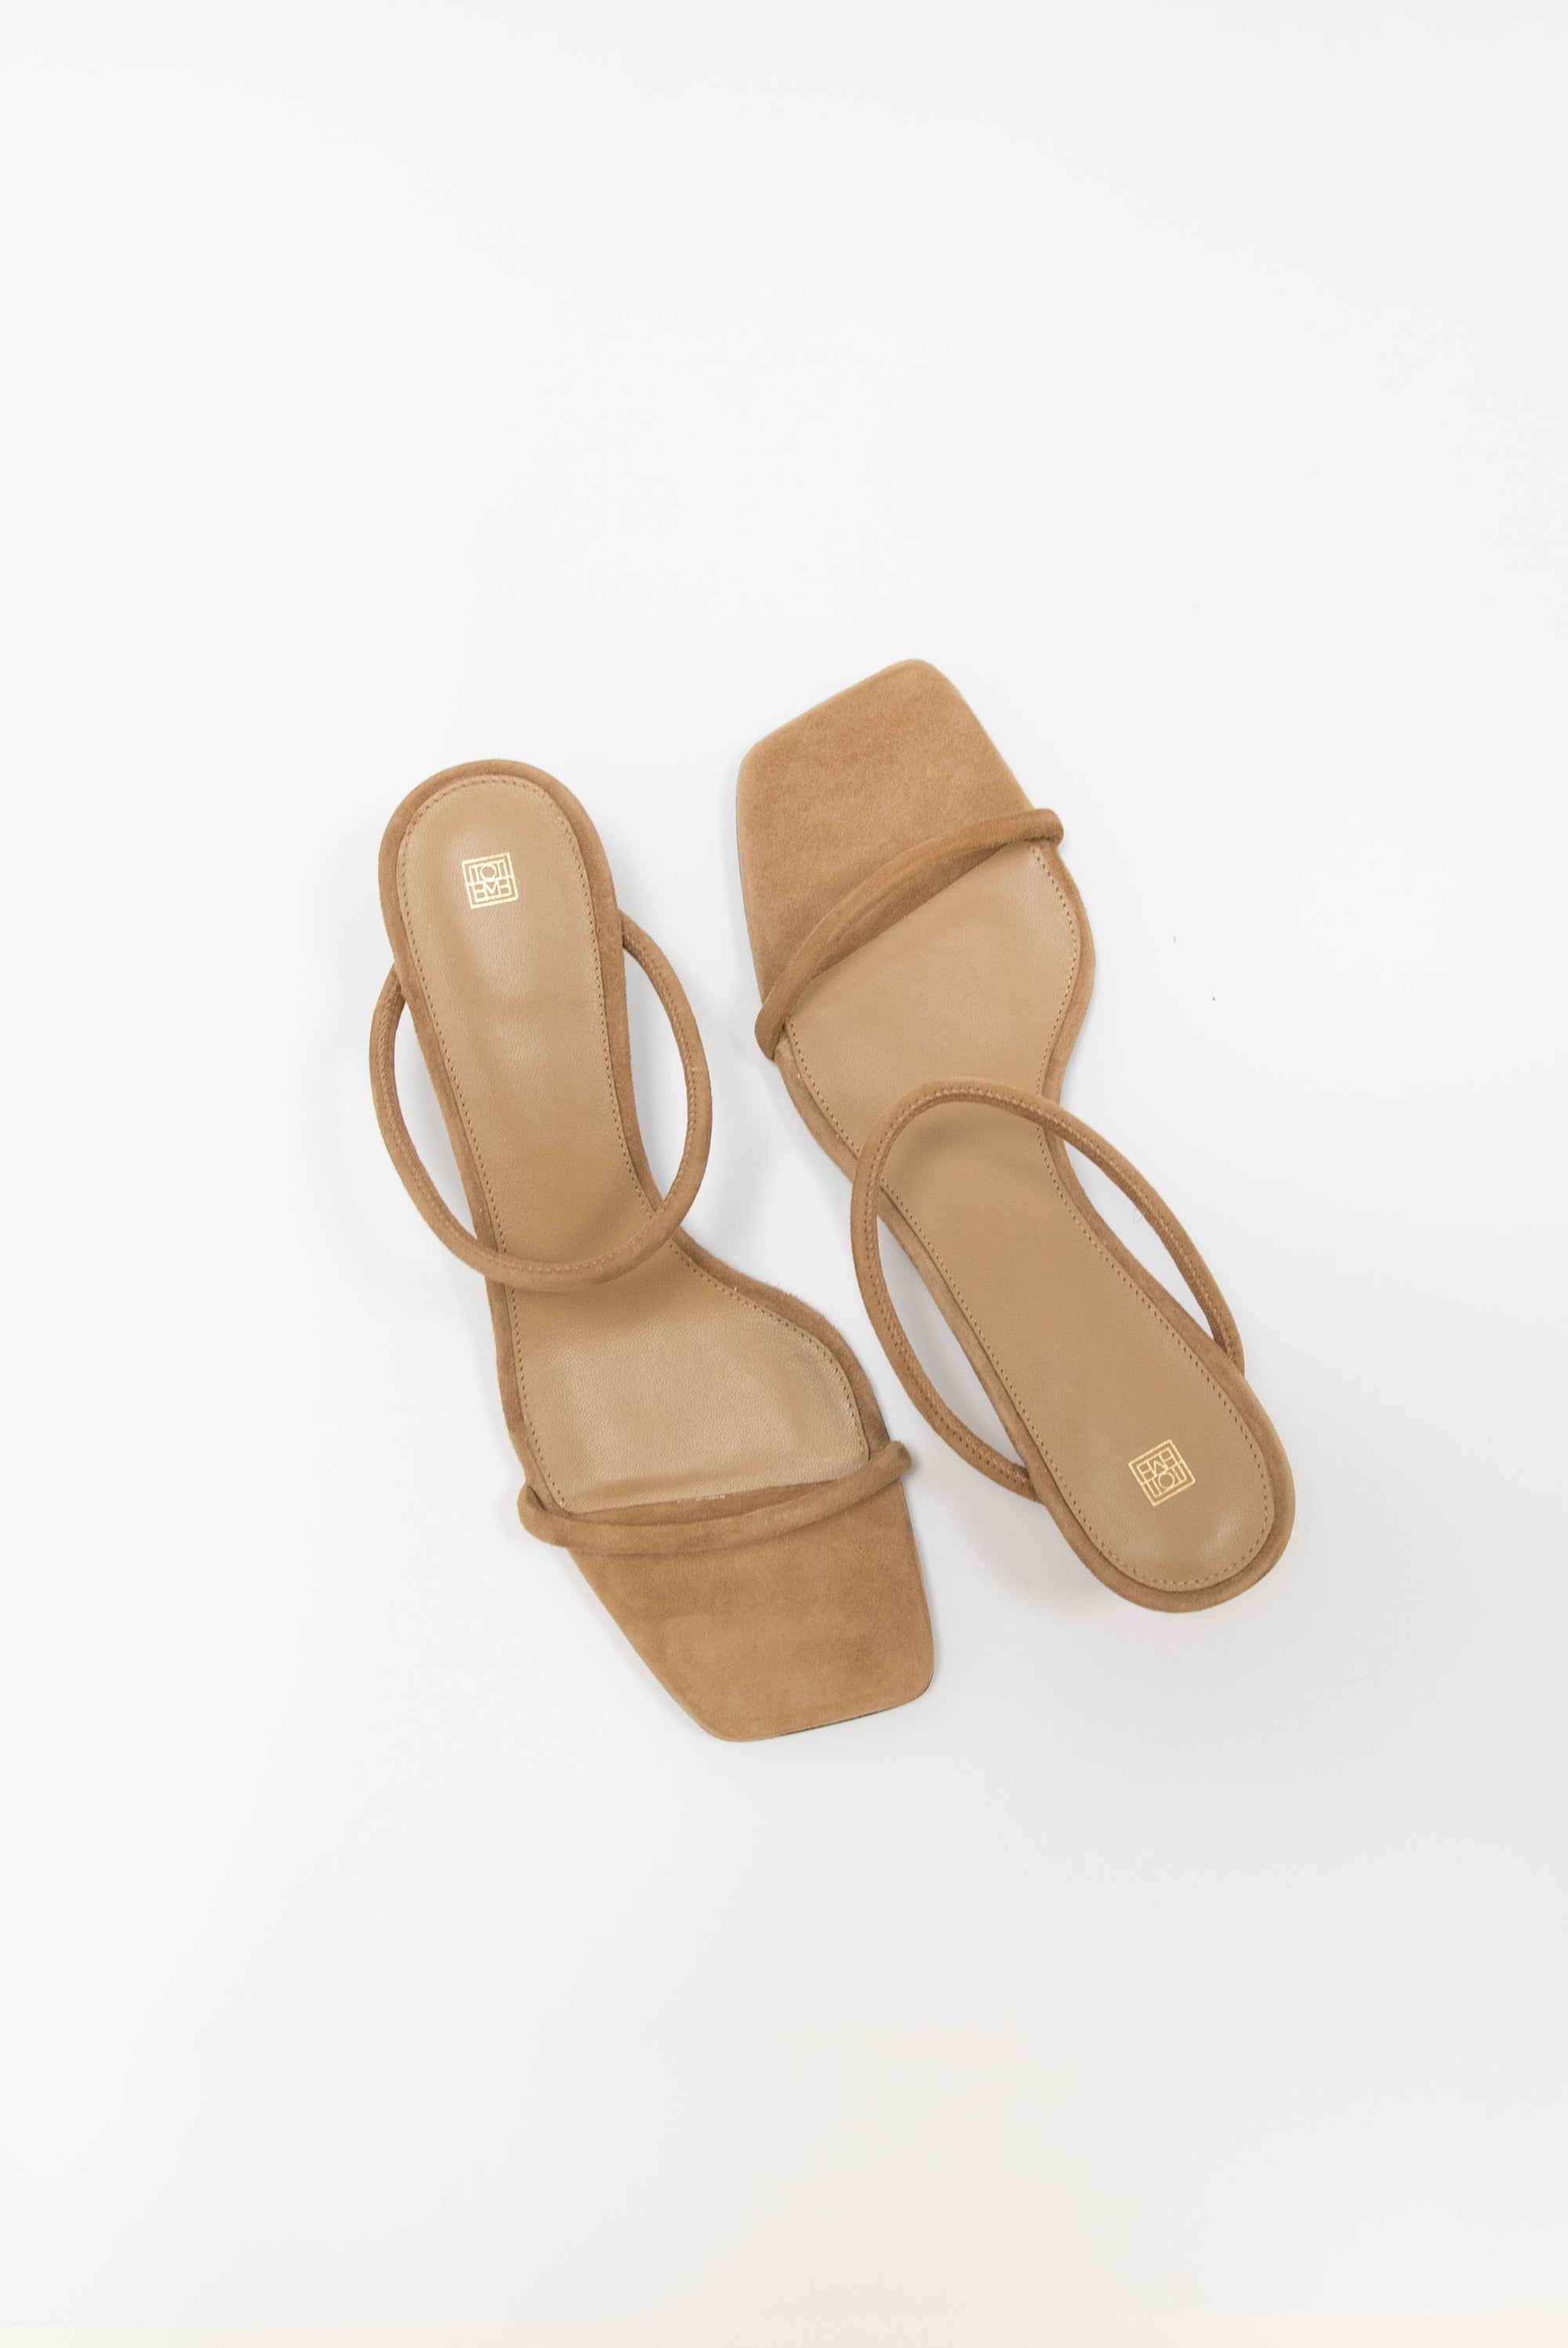 TOTEME - The Minimalist Sandal, Caramel